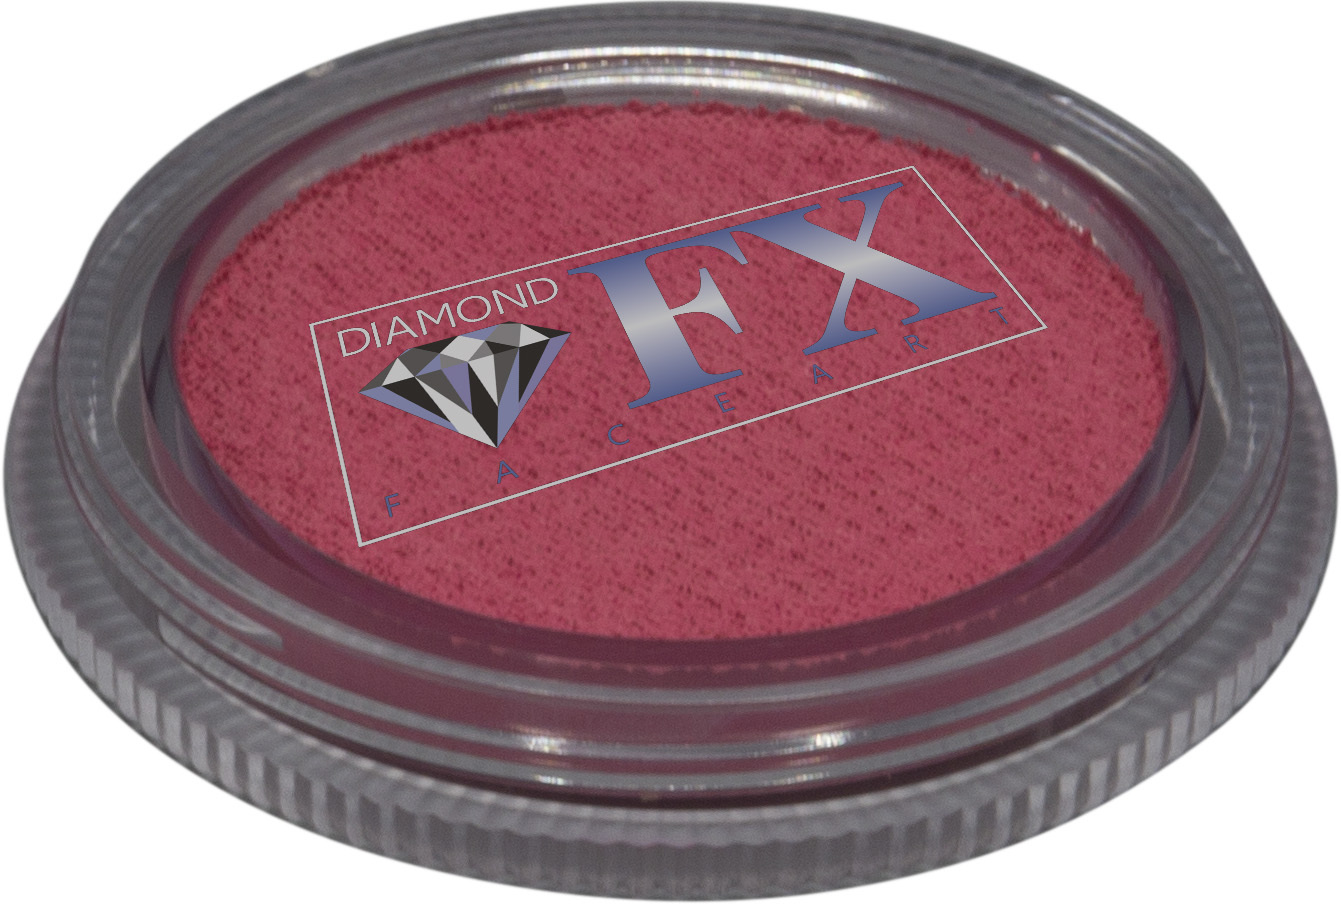 Diamond FX Carmine Pink 30g - Small Image